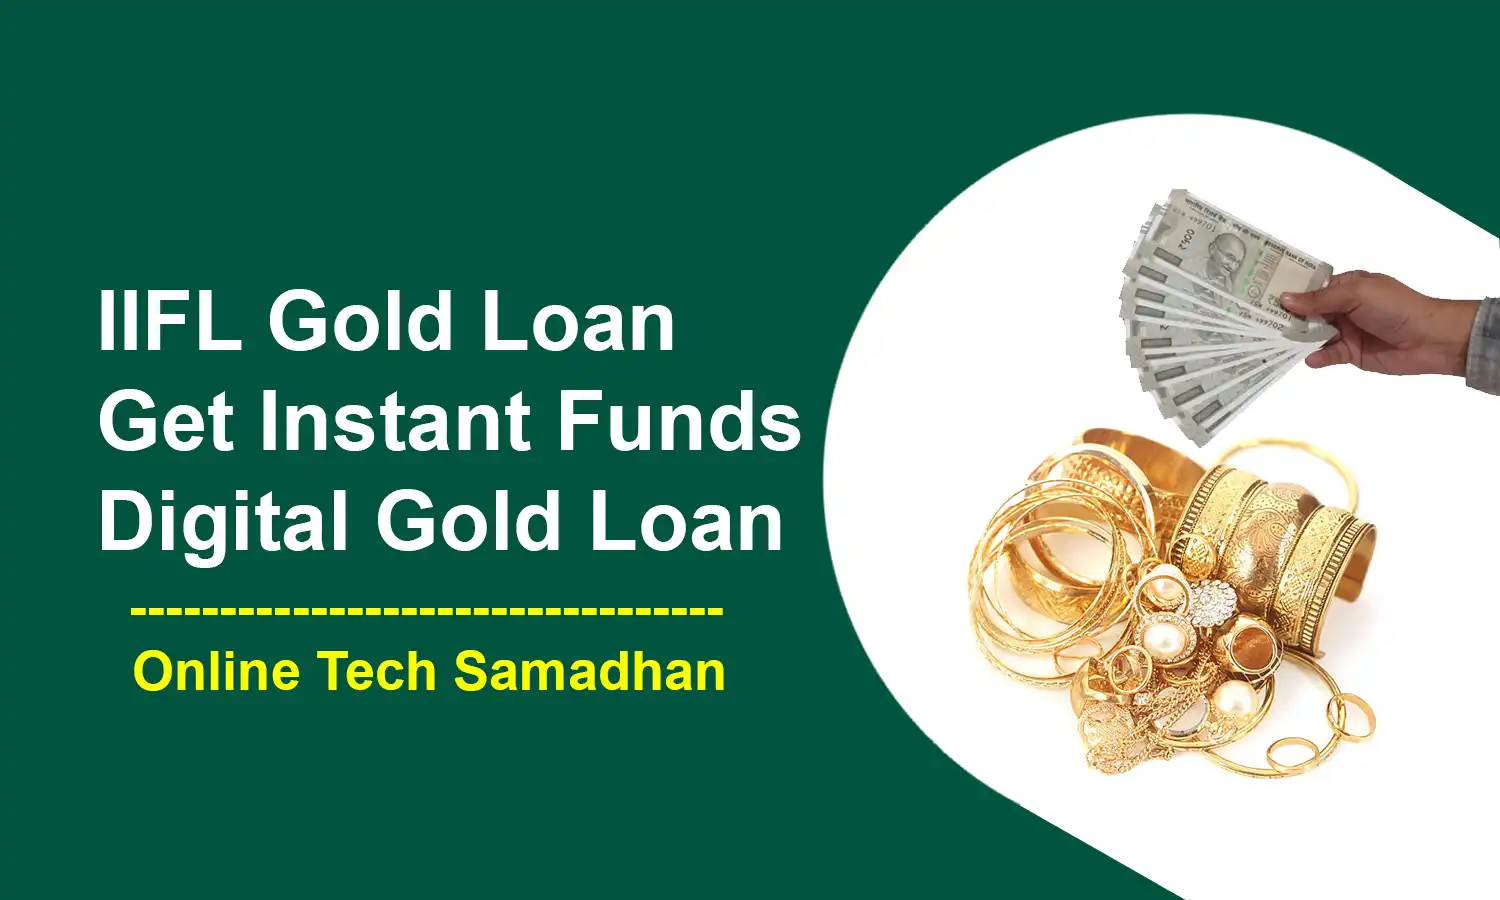 IIFL Gold Loan